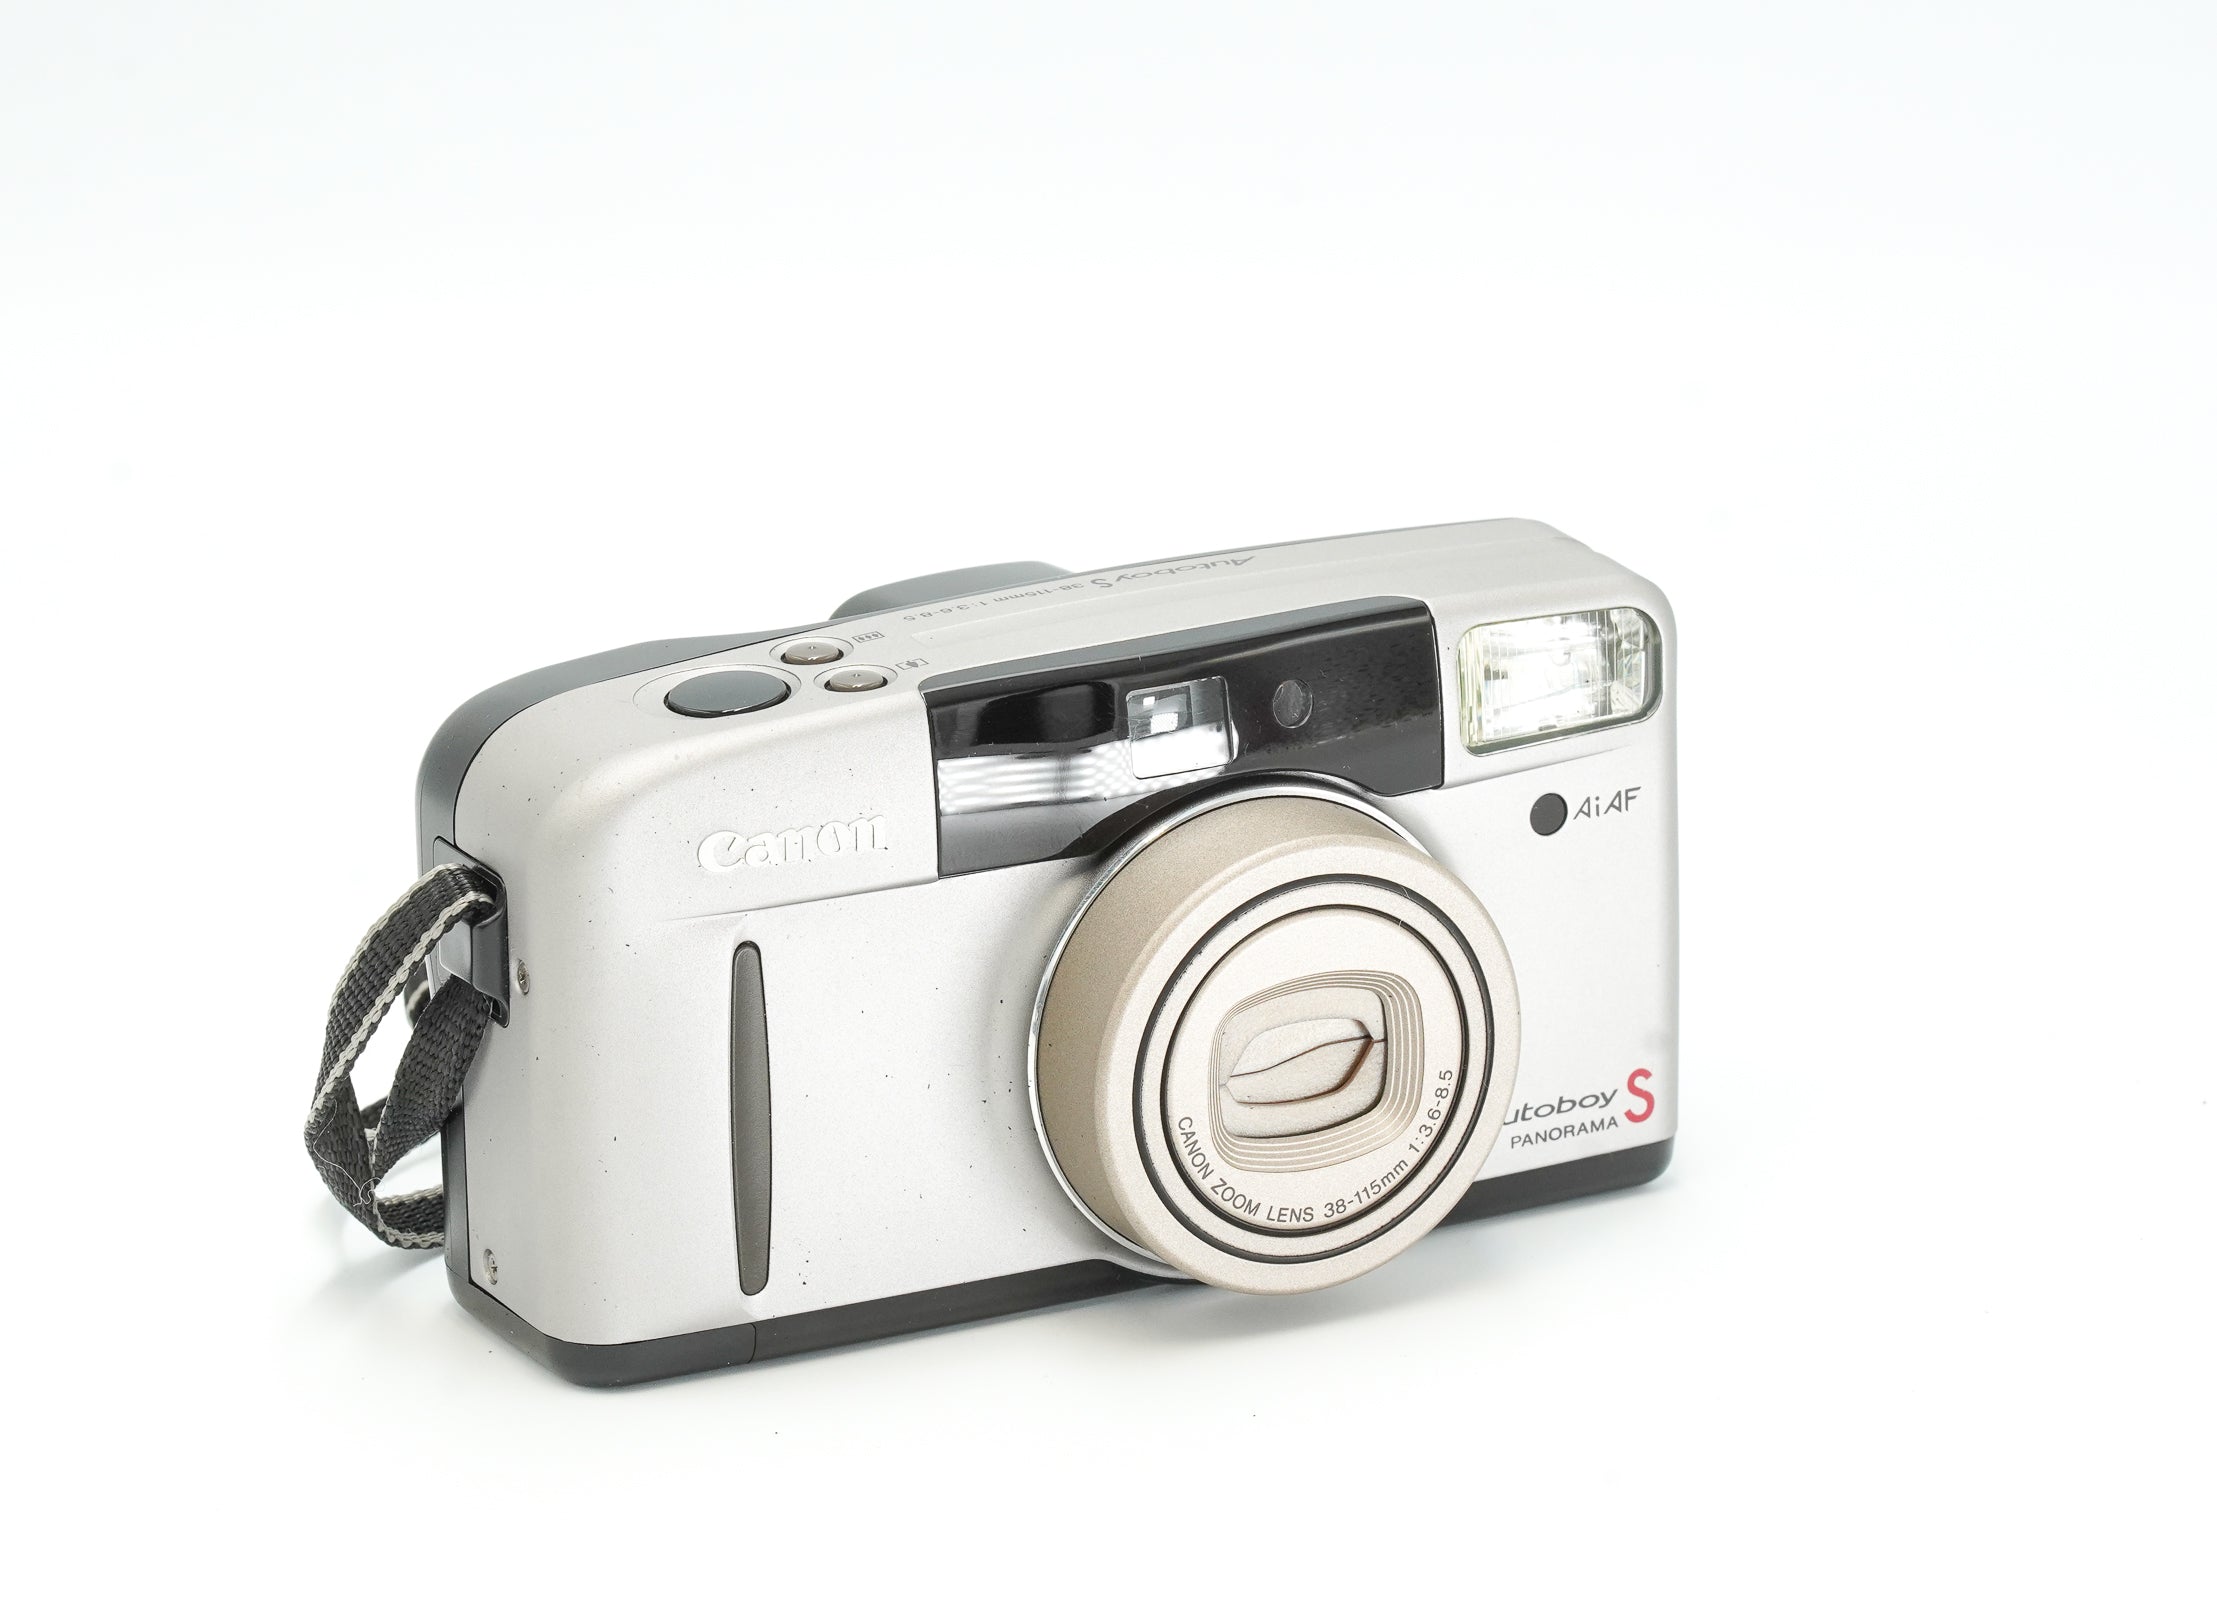 Canon Autoboy S Panorama (SureShot 115) Point & Shoot